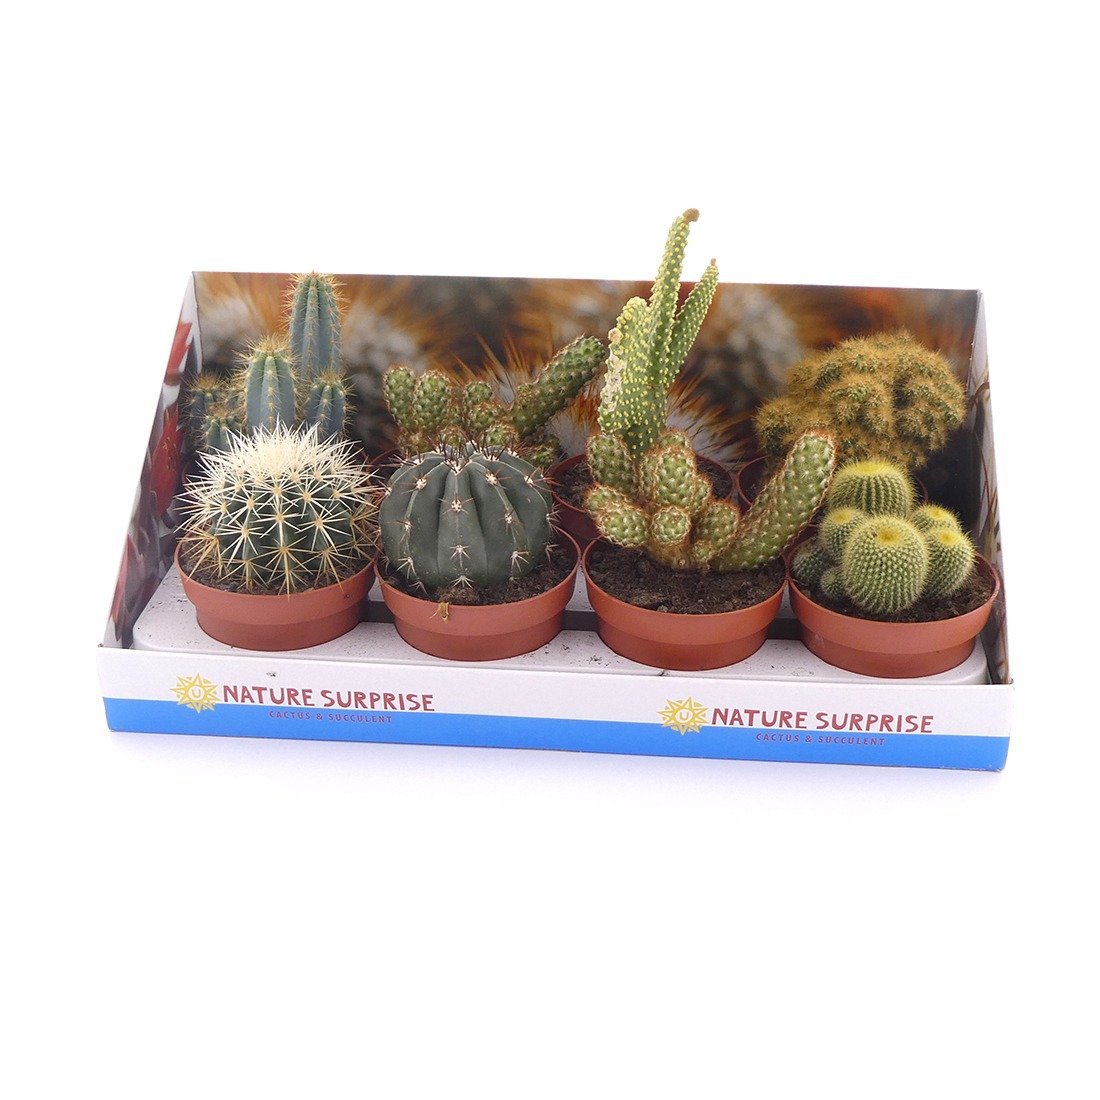 Productfotografie fotostudio planten cactus